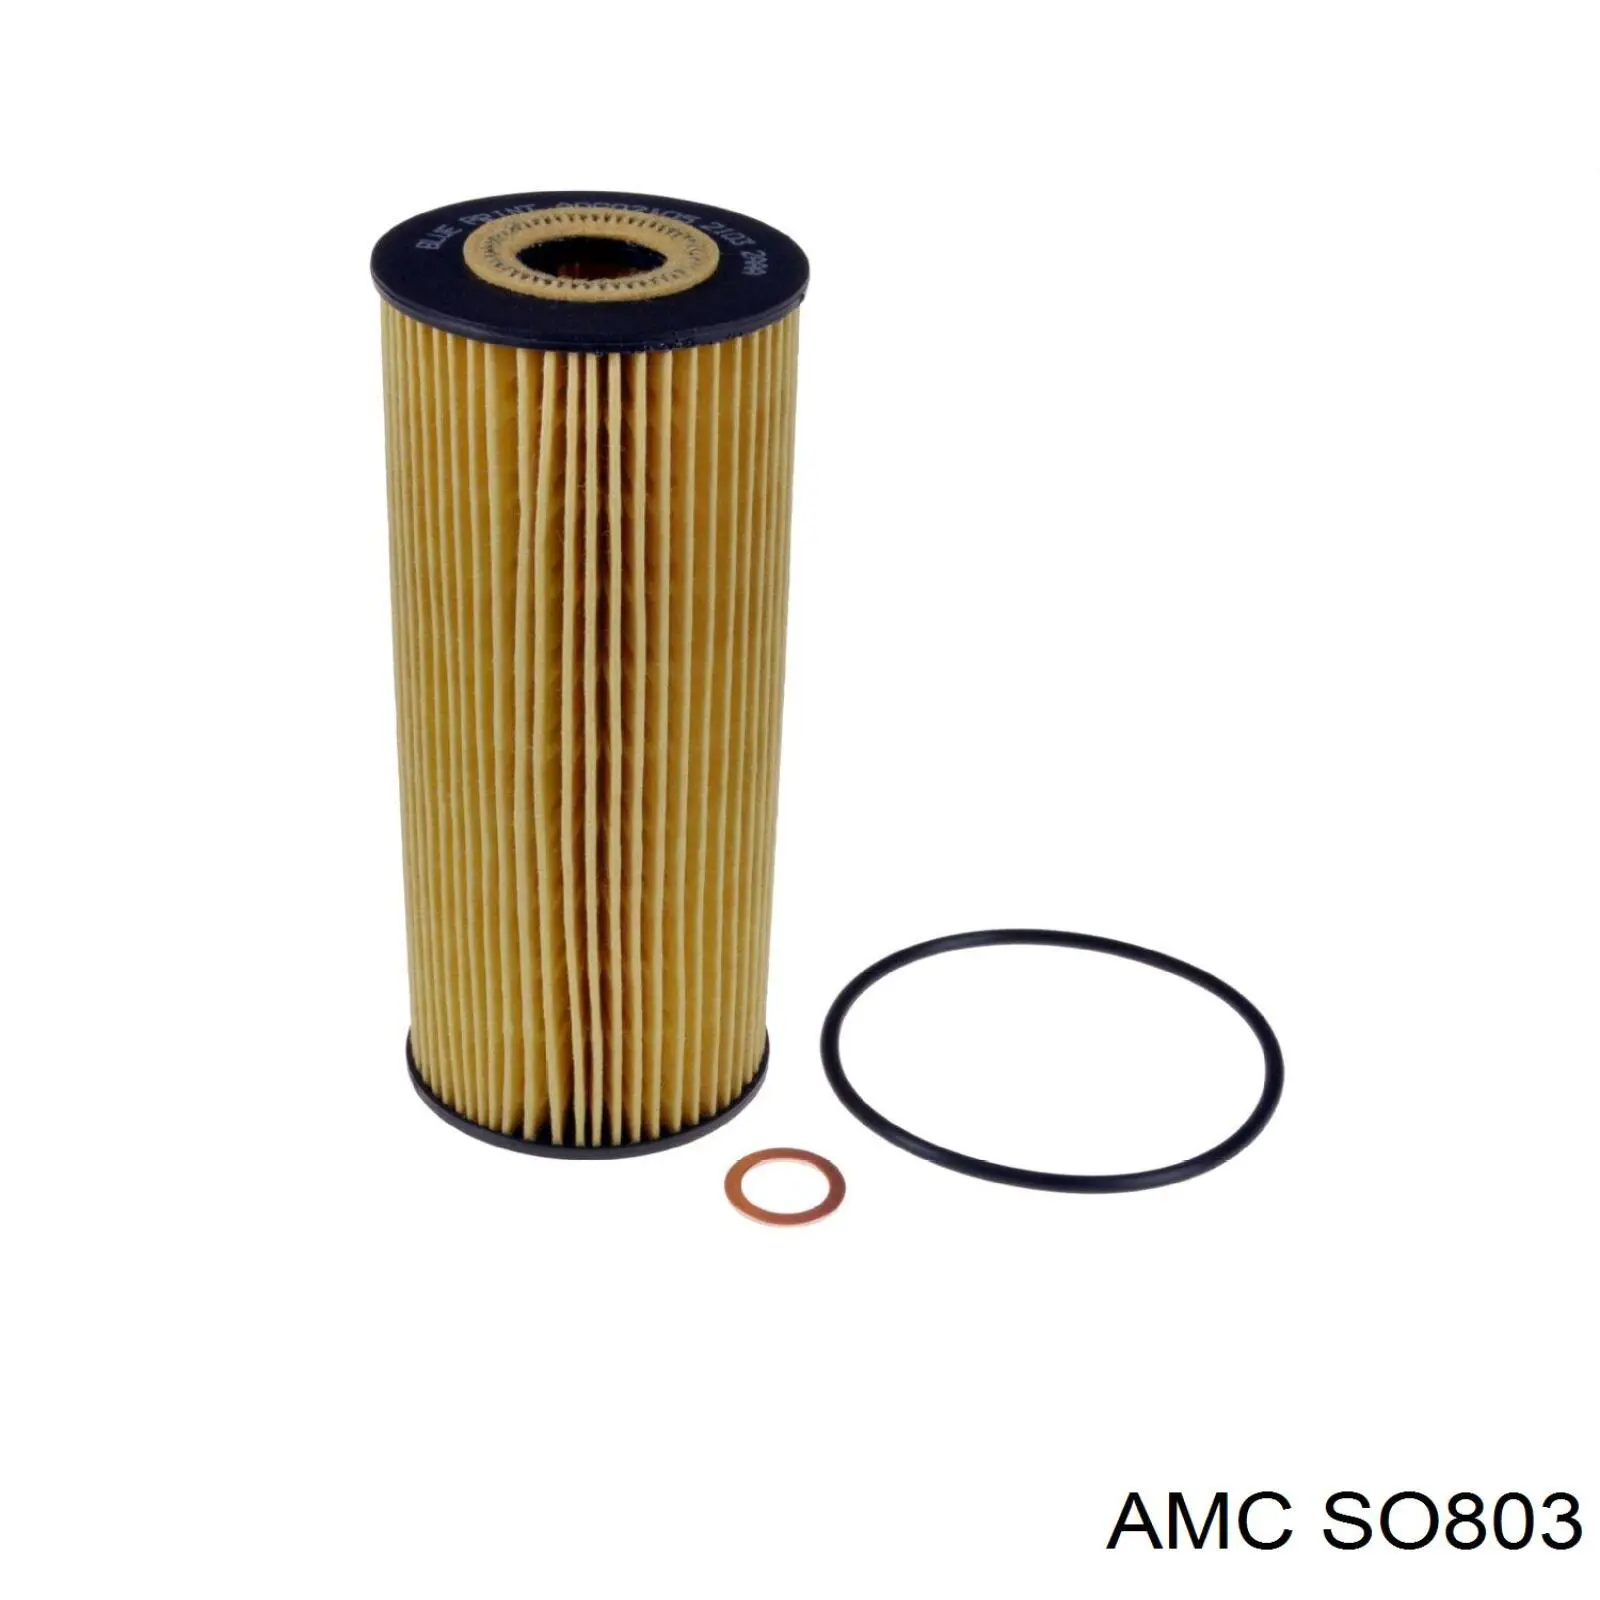 SO-803 AMC filtro de aceite